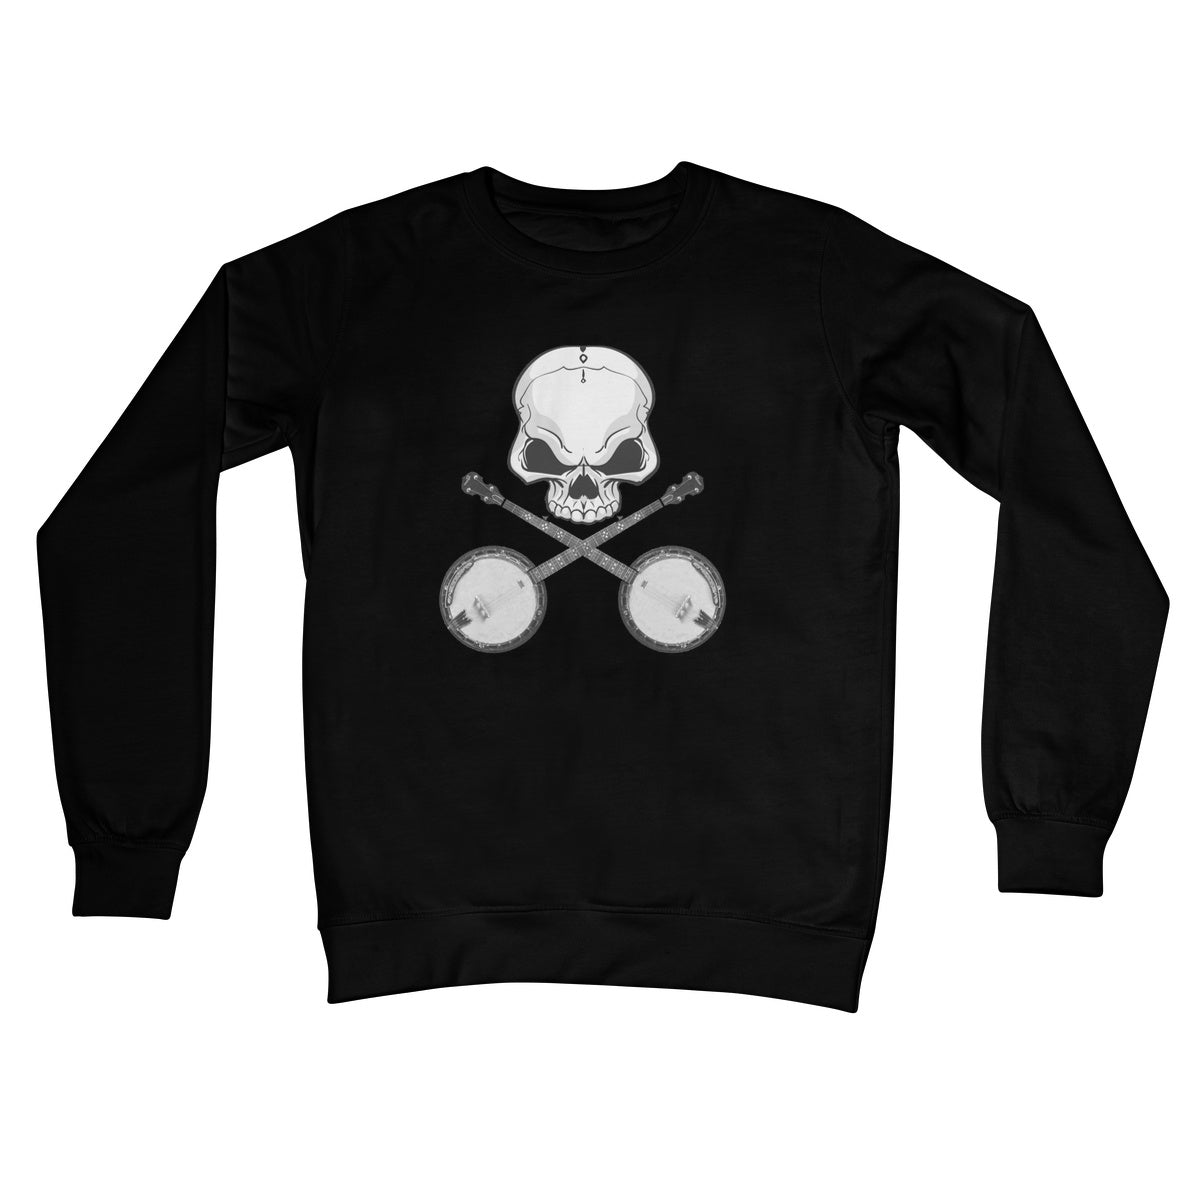 Skull and crossed Banjos Crew Neck Sweatshirt